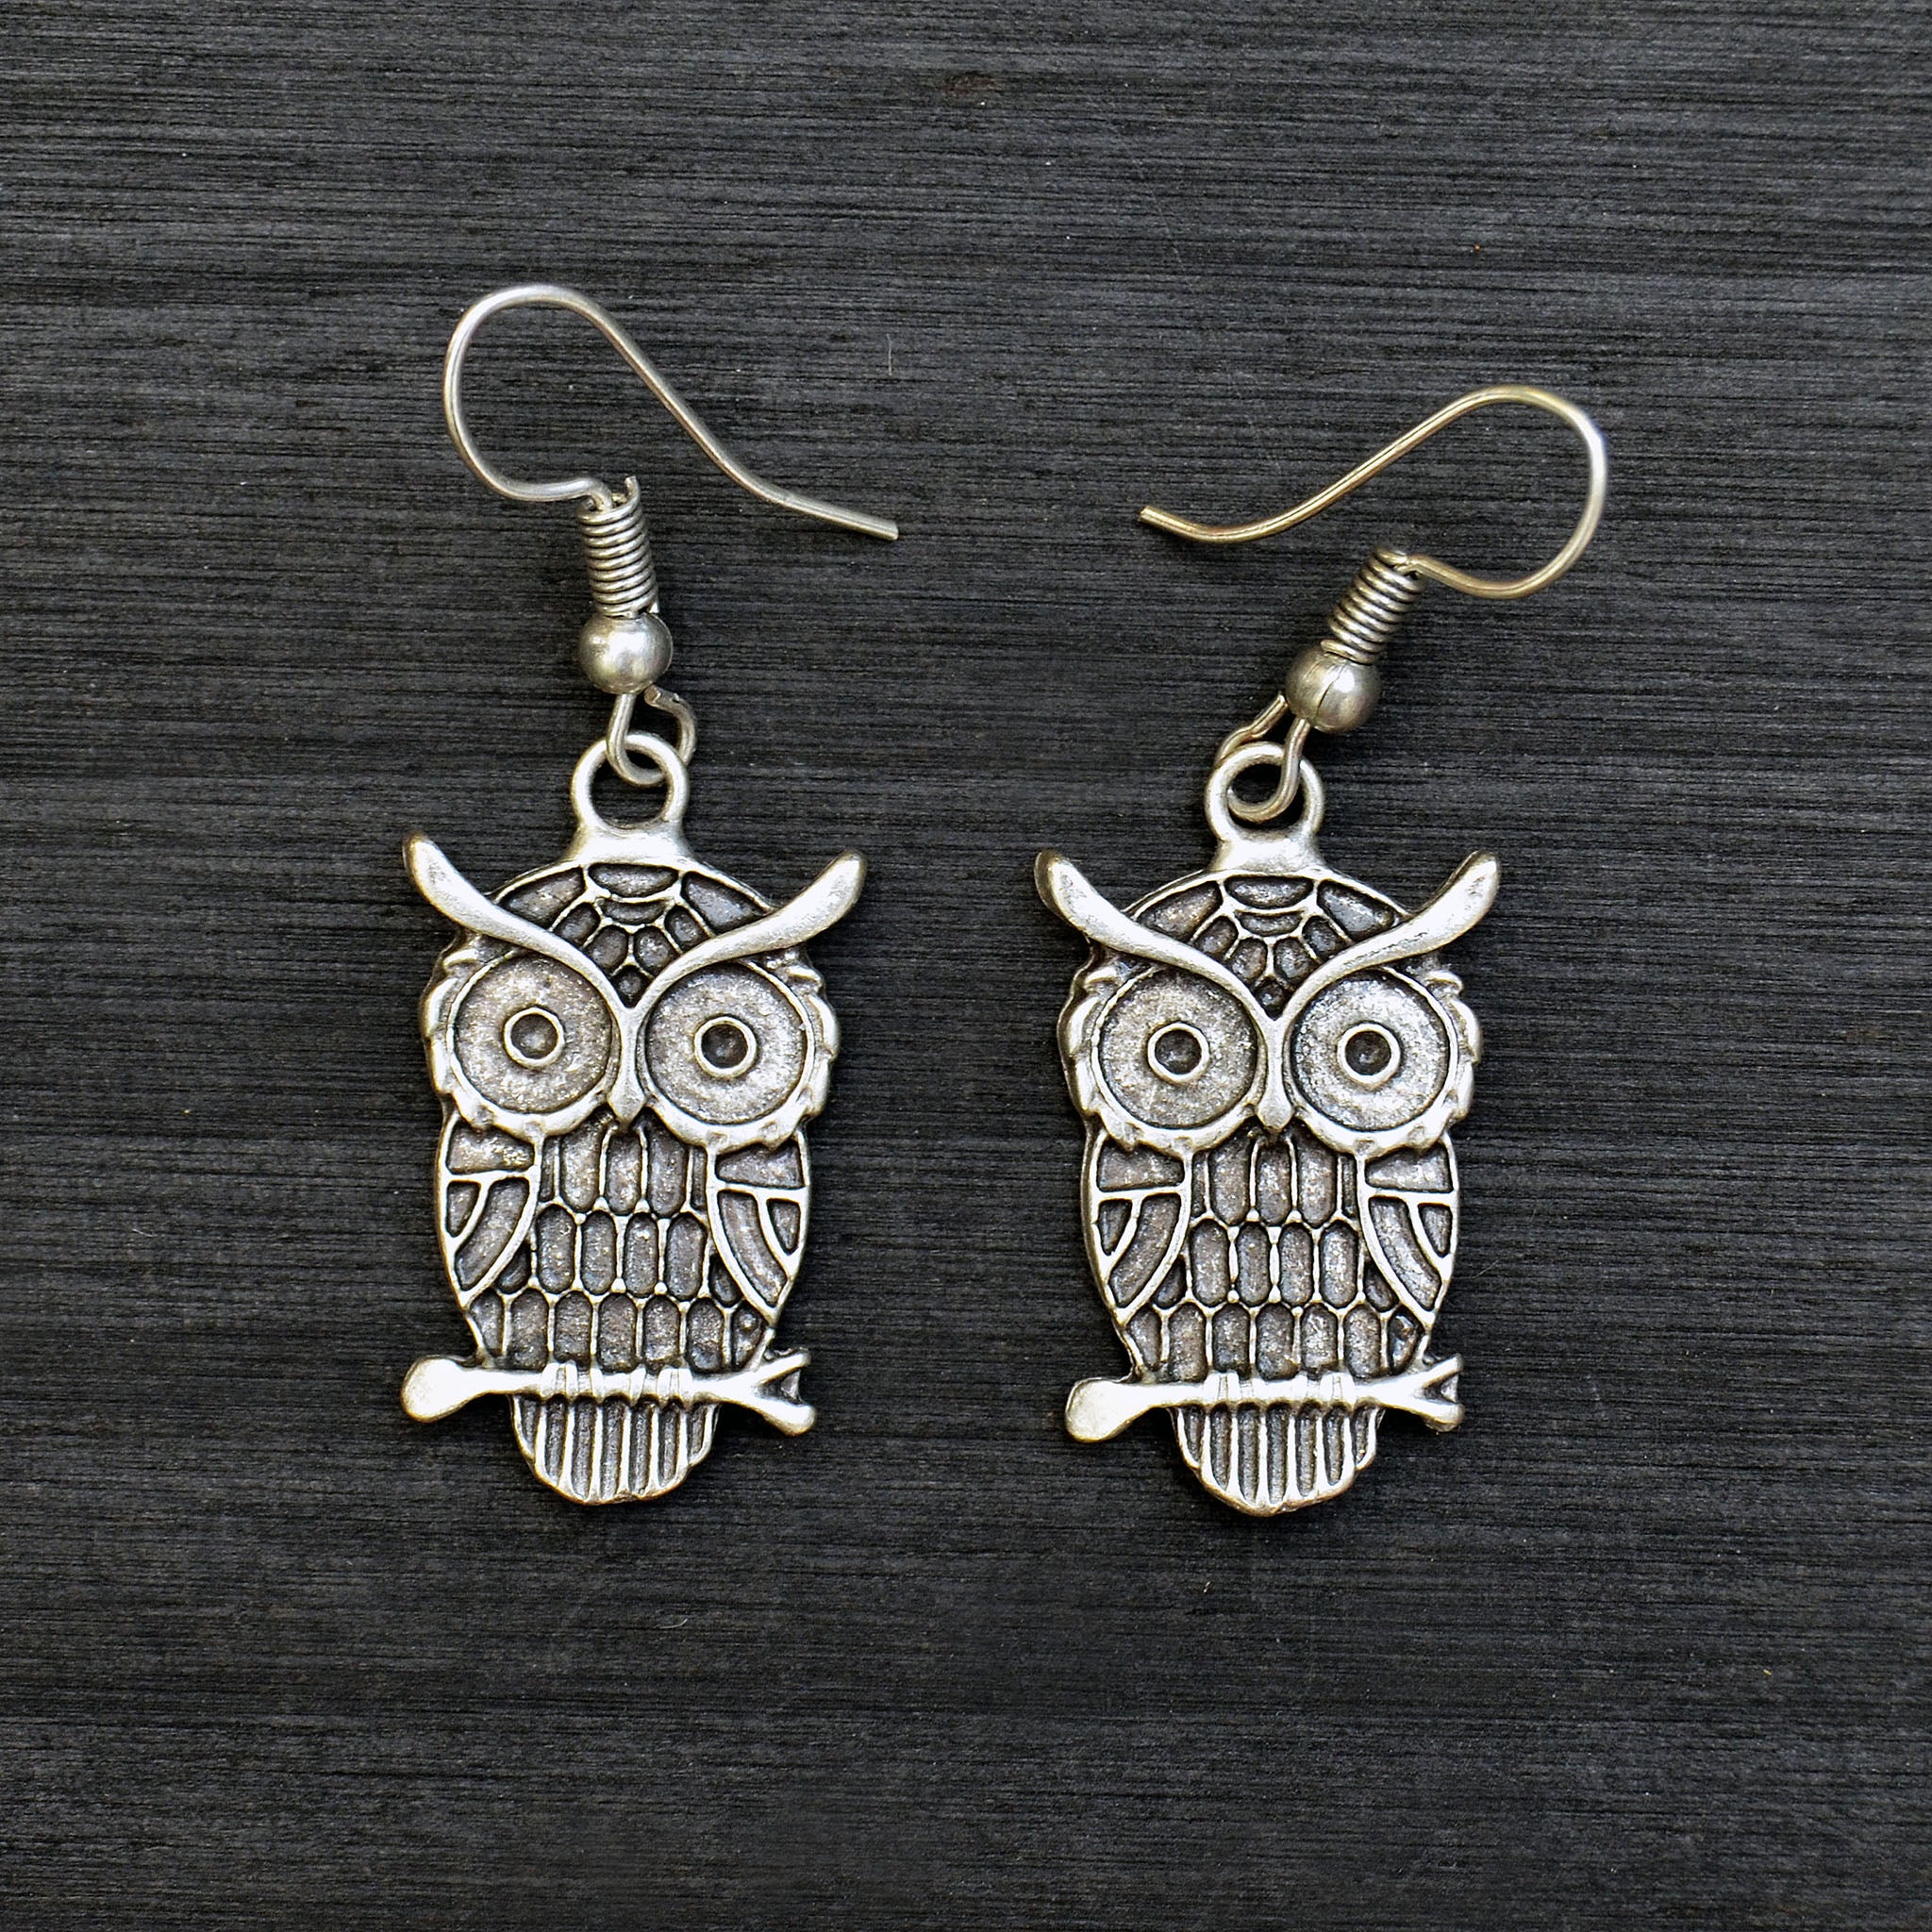 Small silver dangle owl earrings on black background